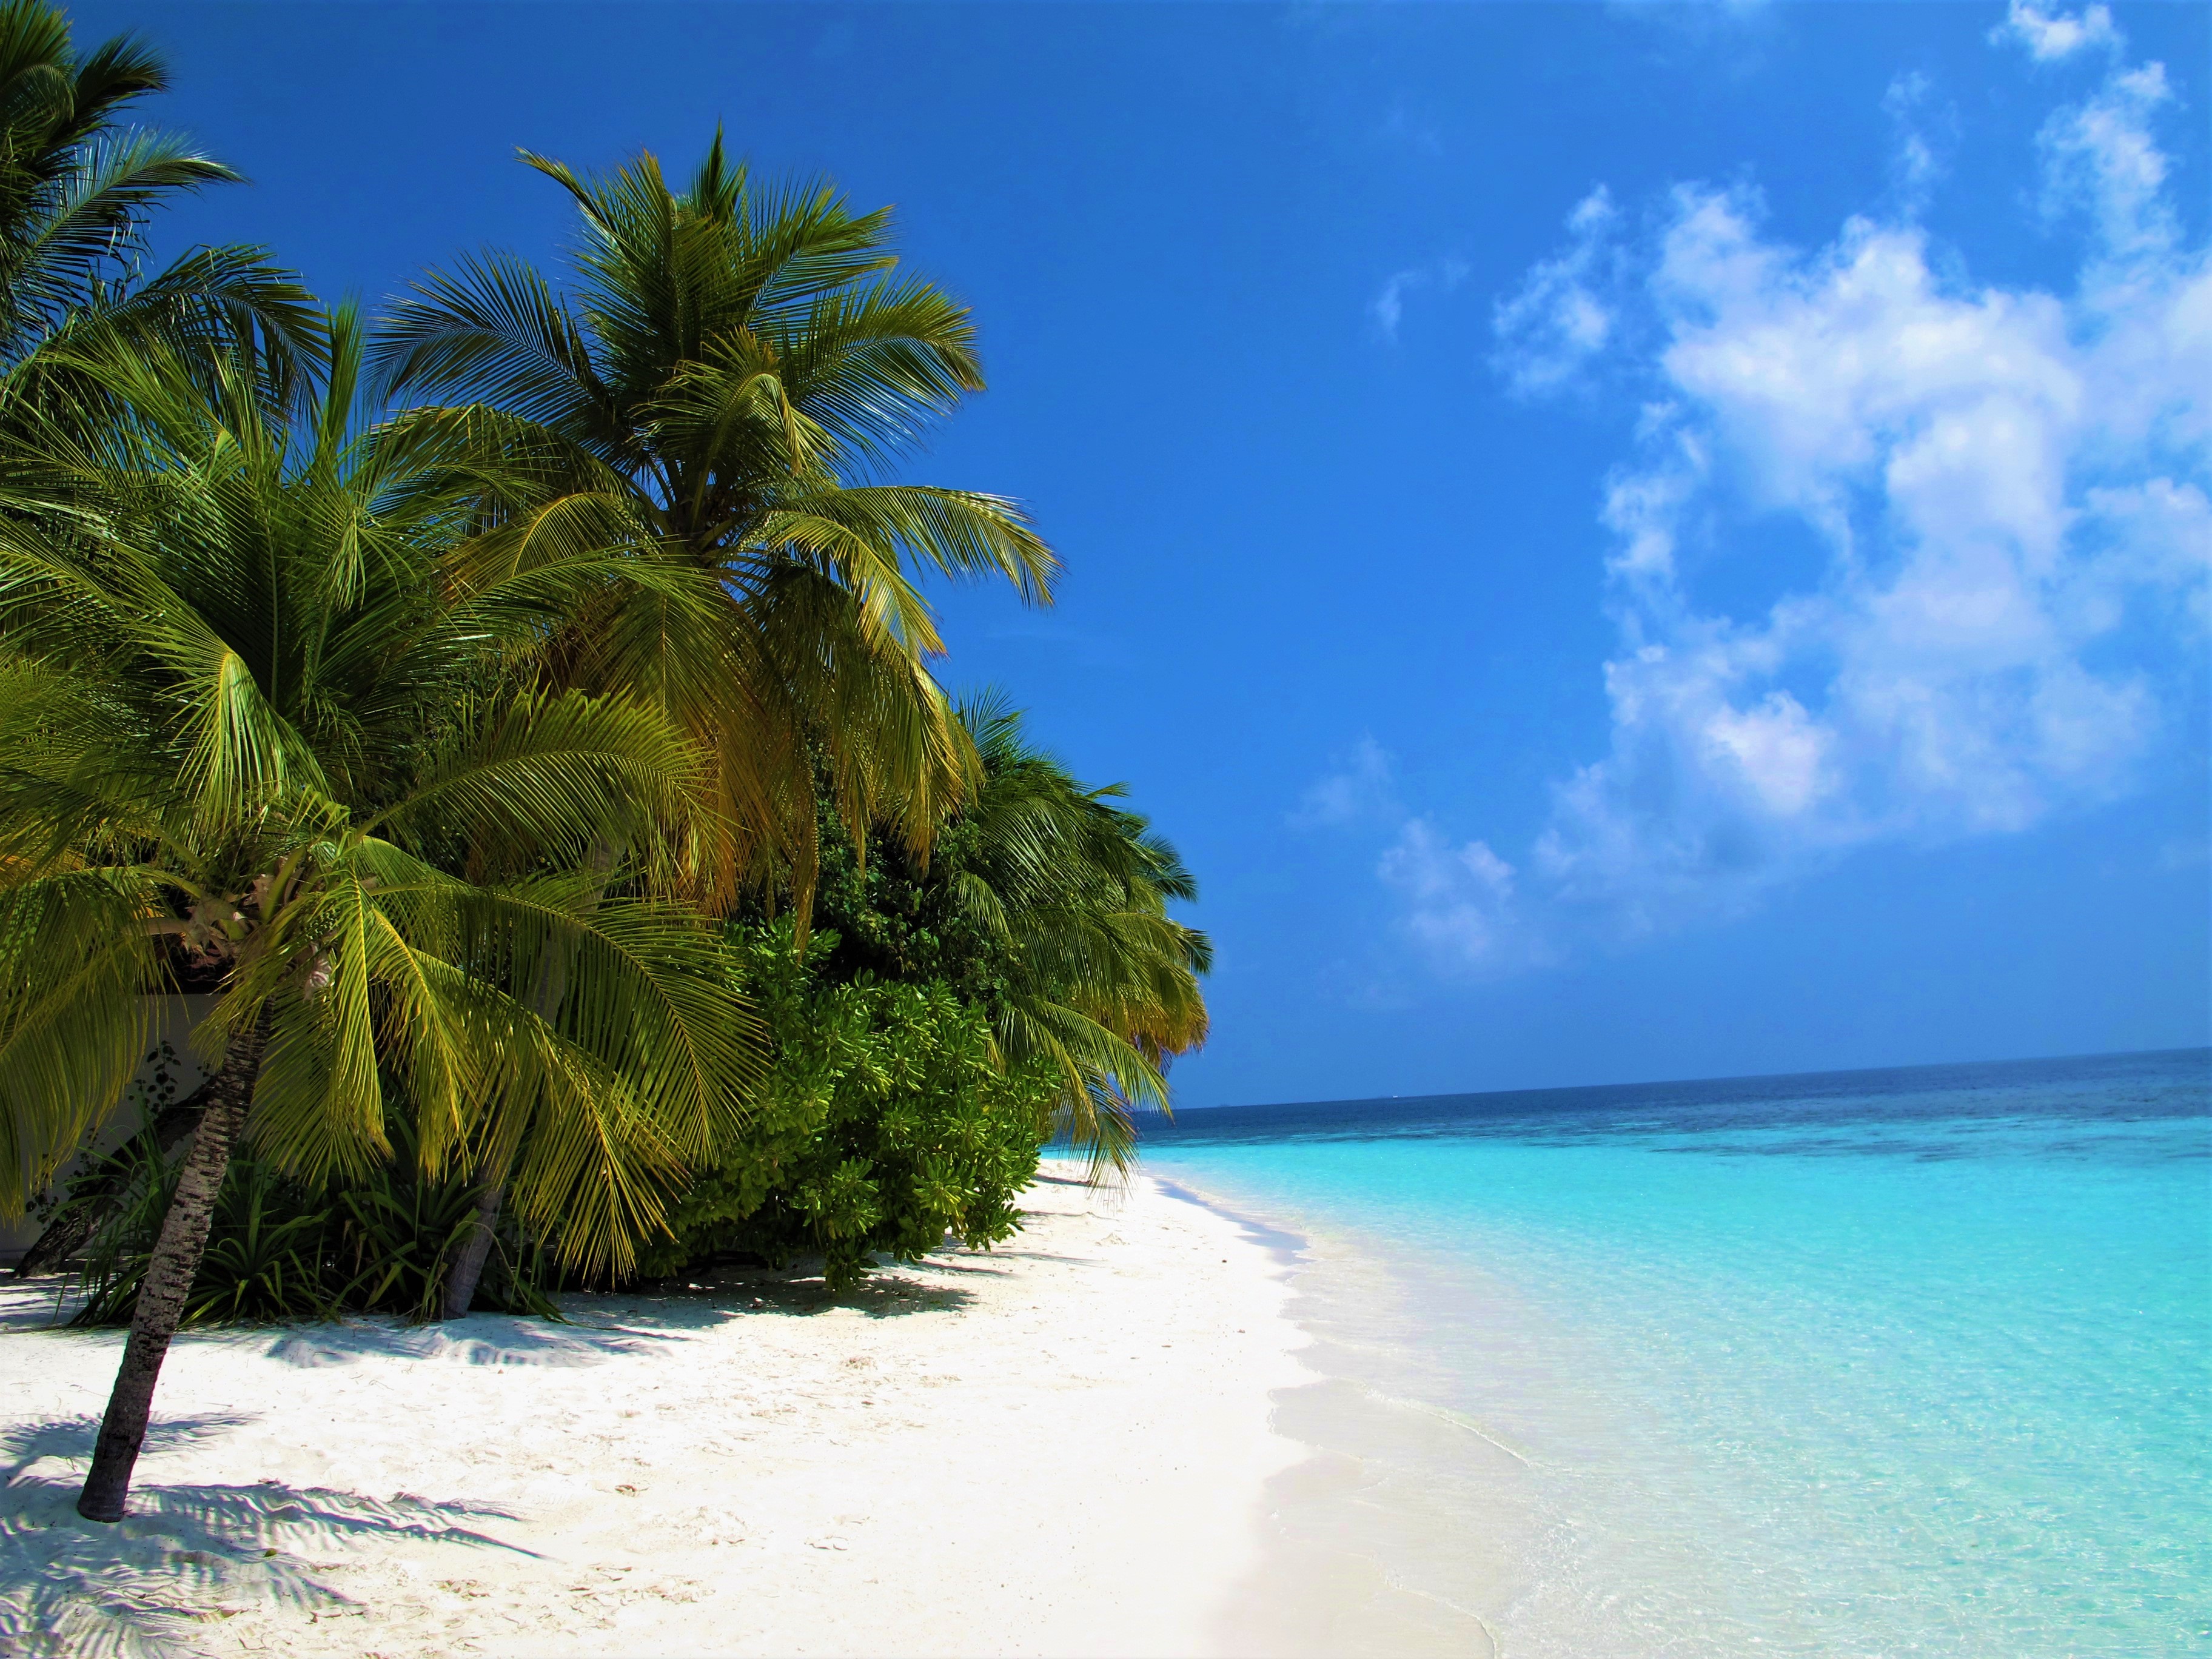 Baixar papel de parede para celular de Mar, Praia, Oceano, Palmeira, Tropical, Maldivas, Terra/natureza gratuito.